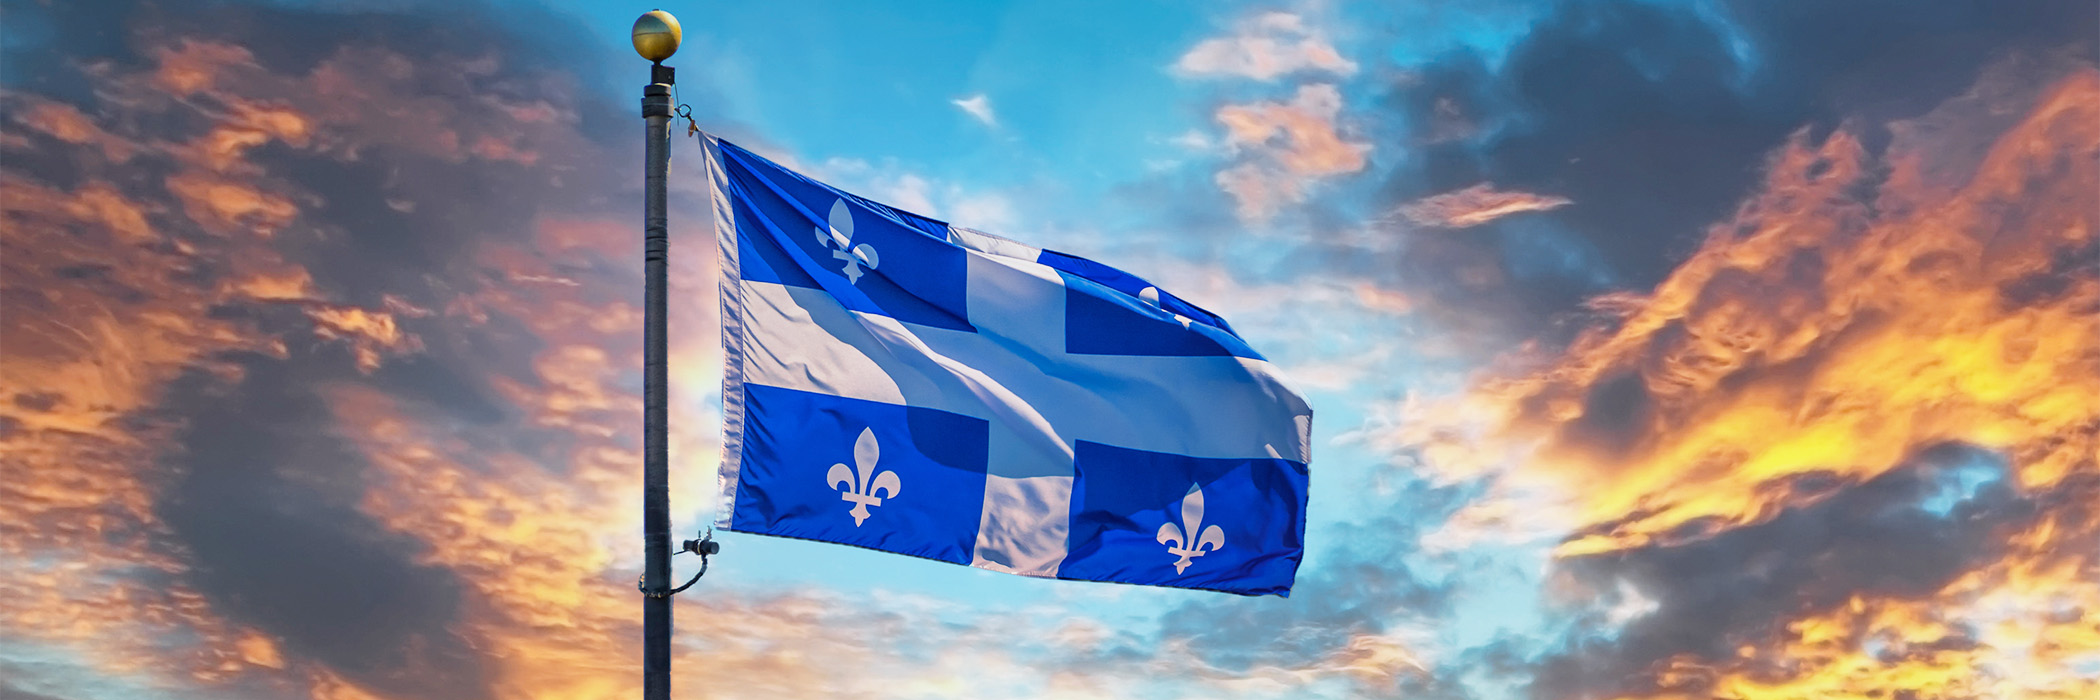 Quebec flag banner shutterstock